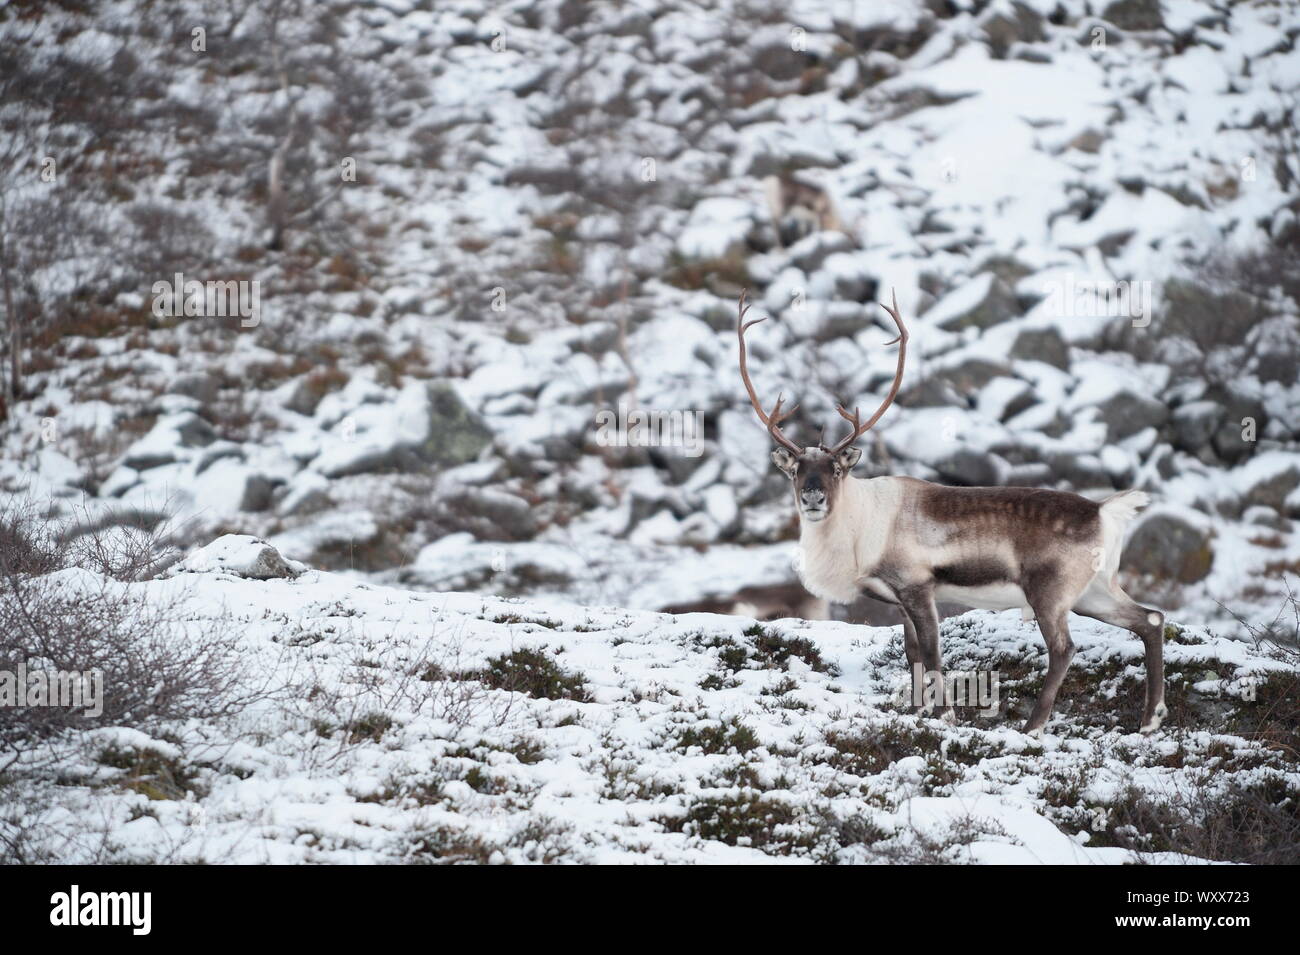 Reindeer (Rangifer tarandus) in snow, Norway Stock Photo